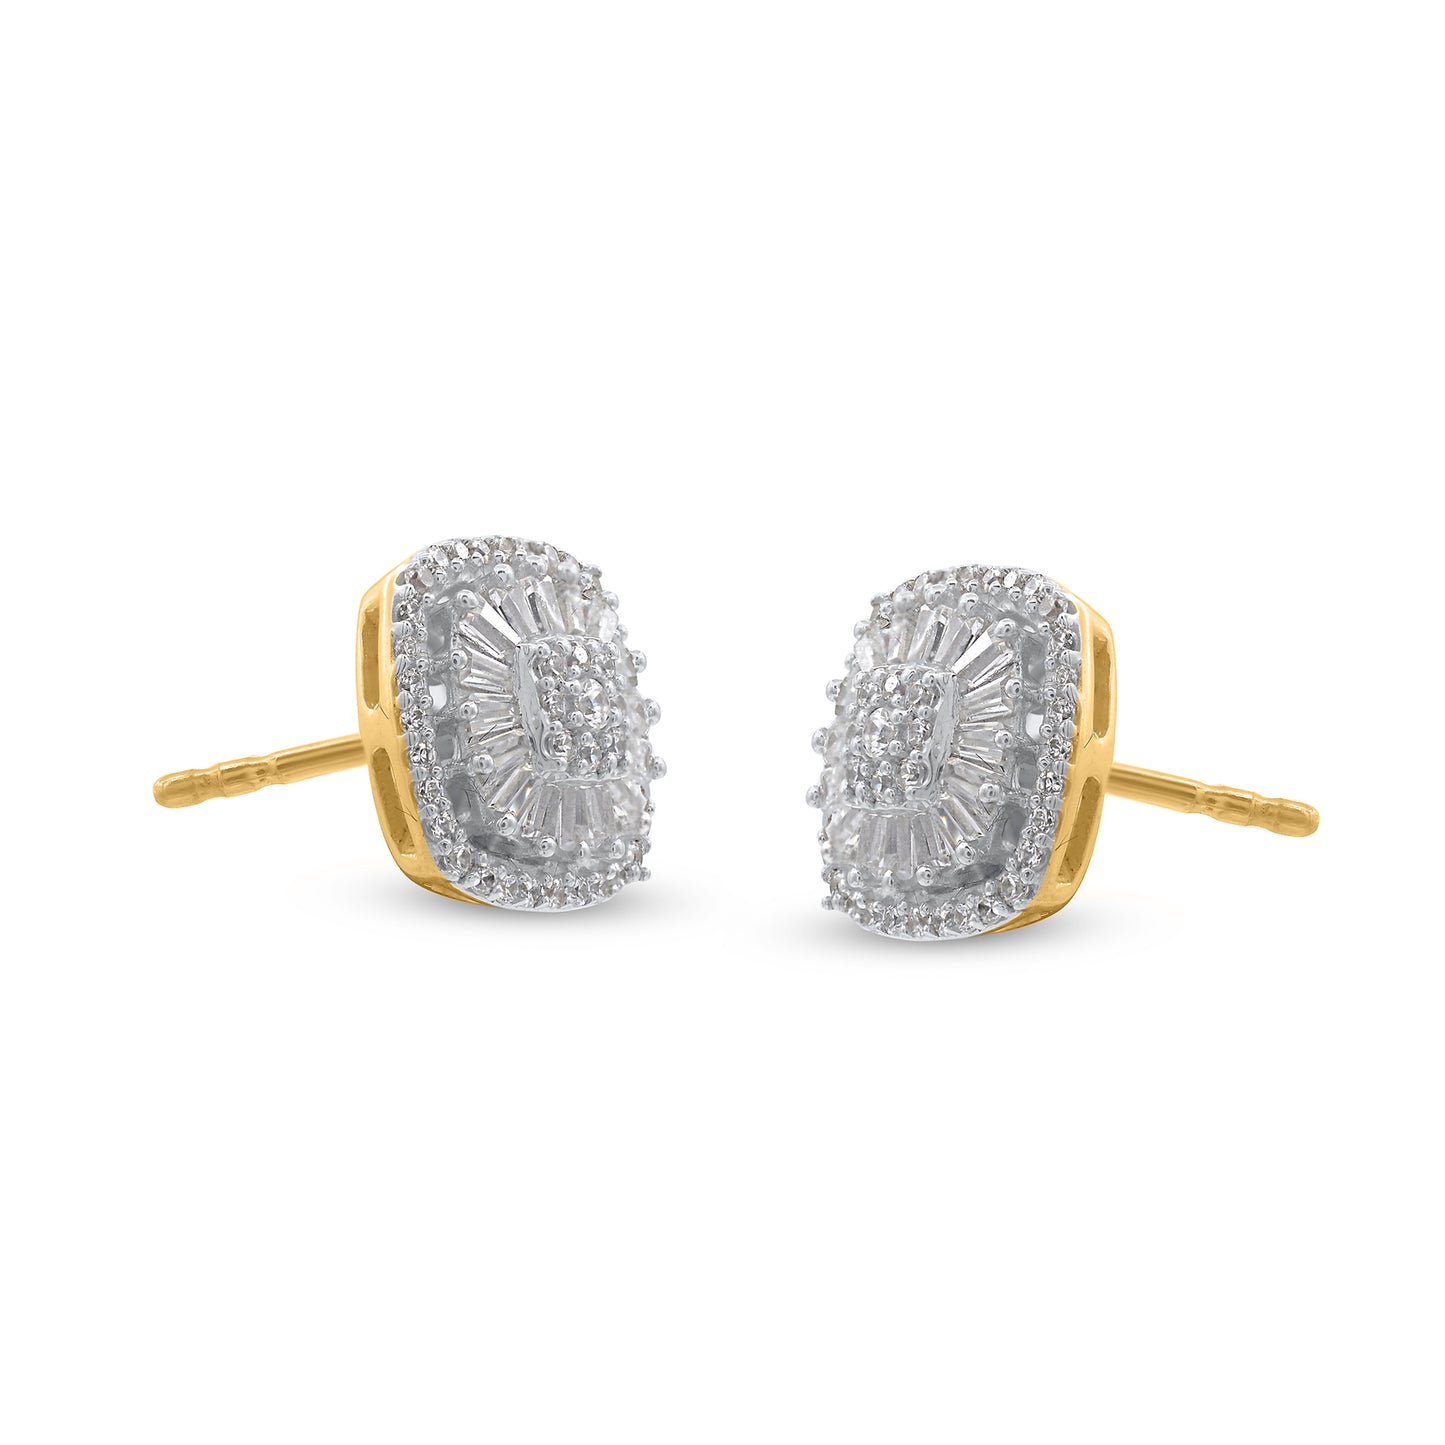 Cluster Stud Wedding Earrings in 10K Gold